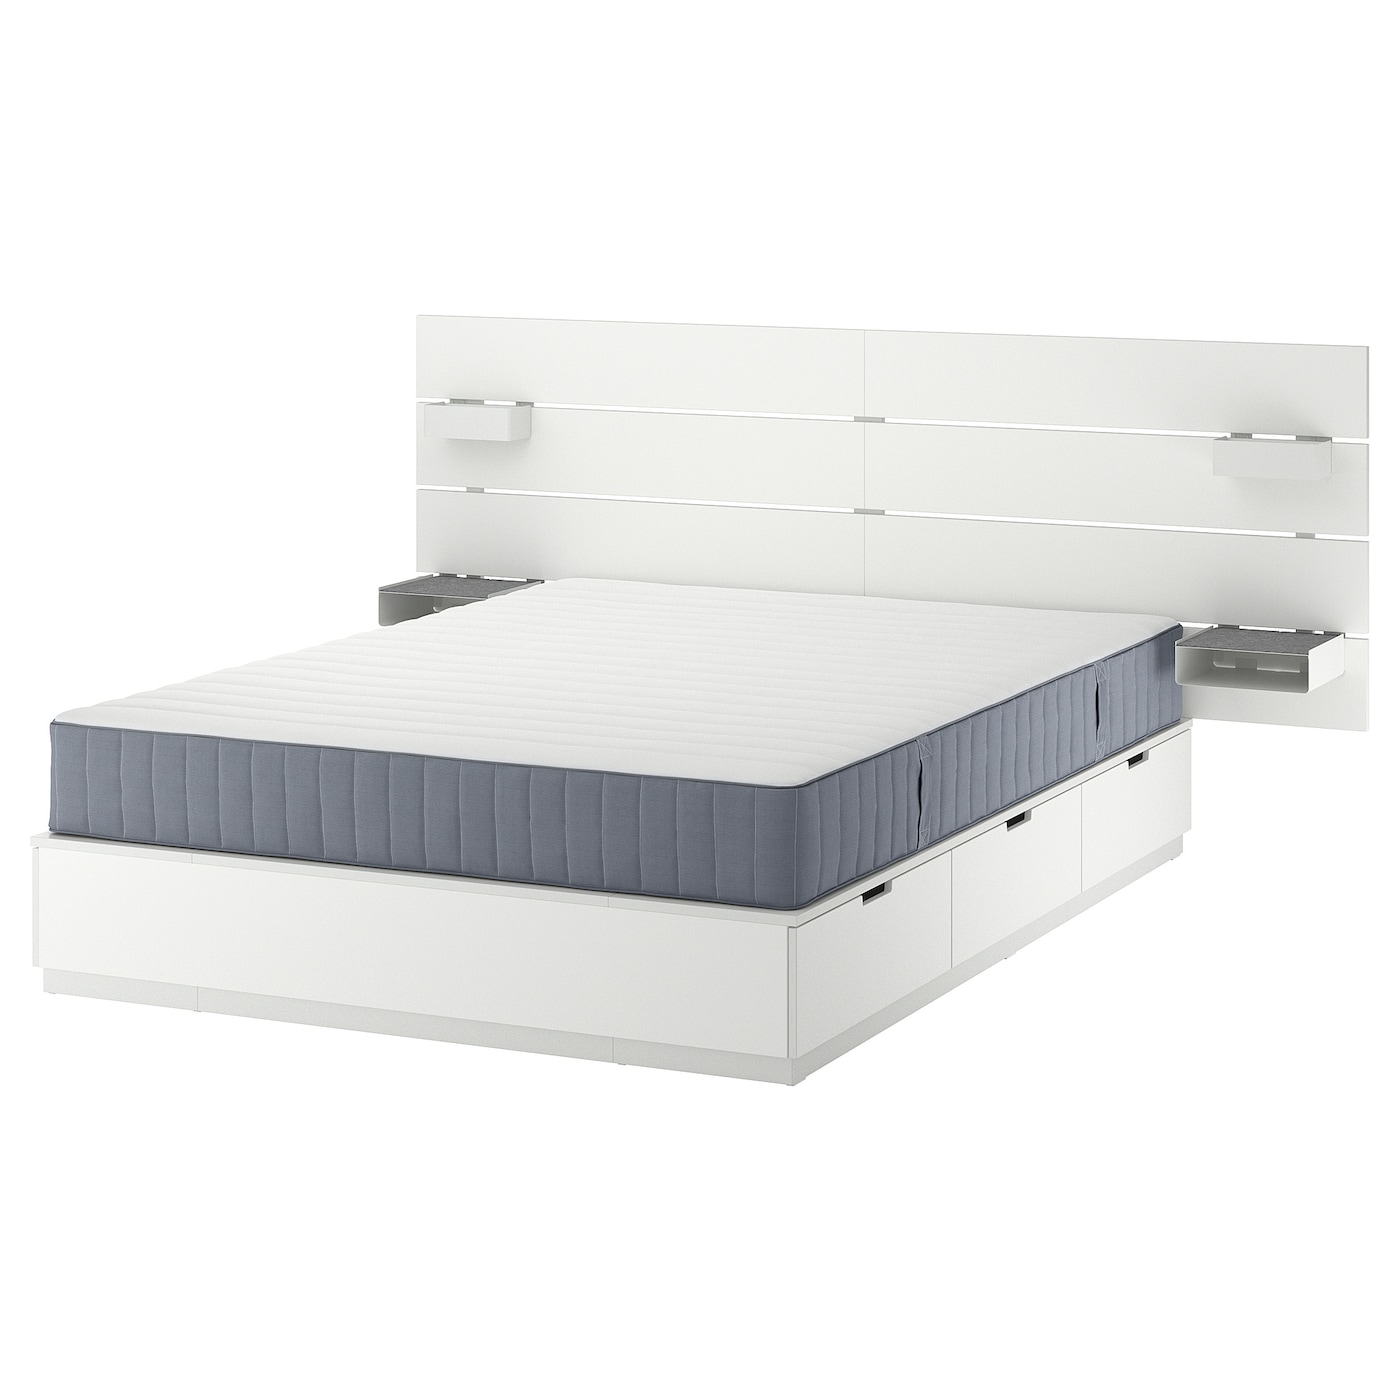 Каркас кровати с контейнером и матрасом - IKEA NORDLI, 160х200 см, жесткий матрас, белый, НОРДЛИ ИКЕА